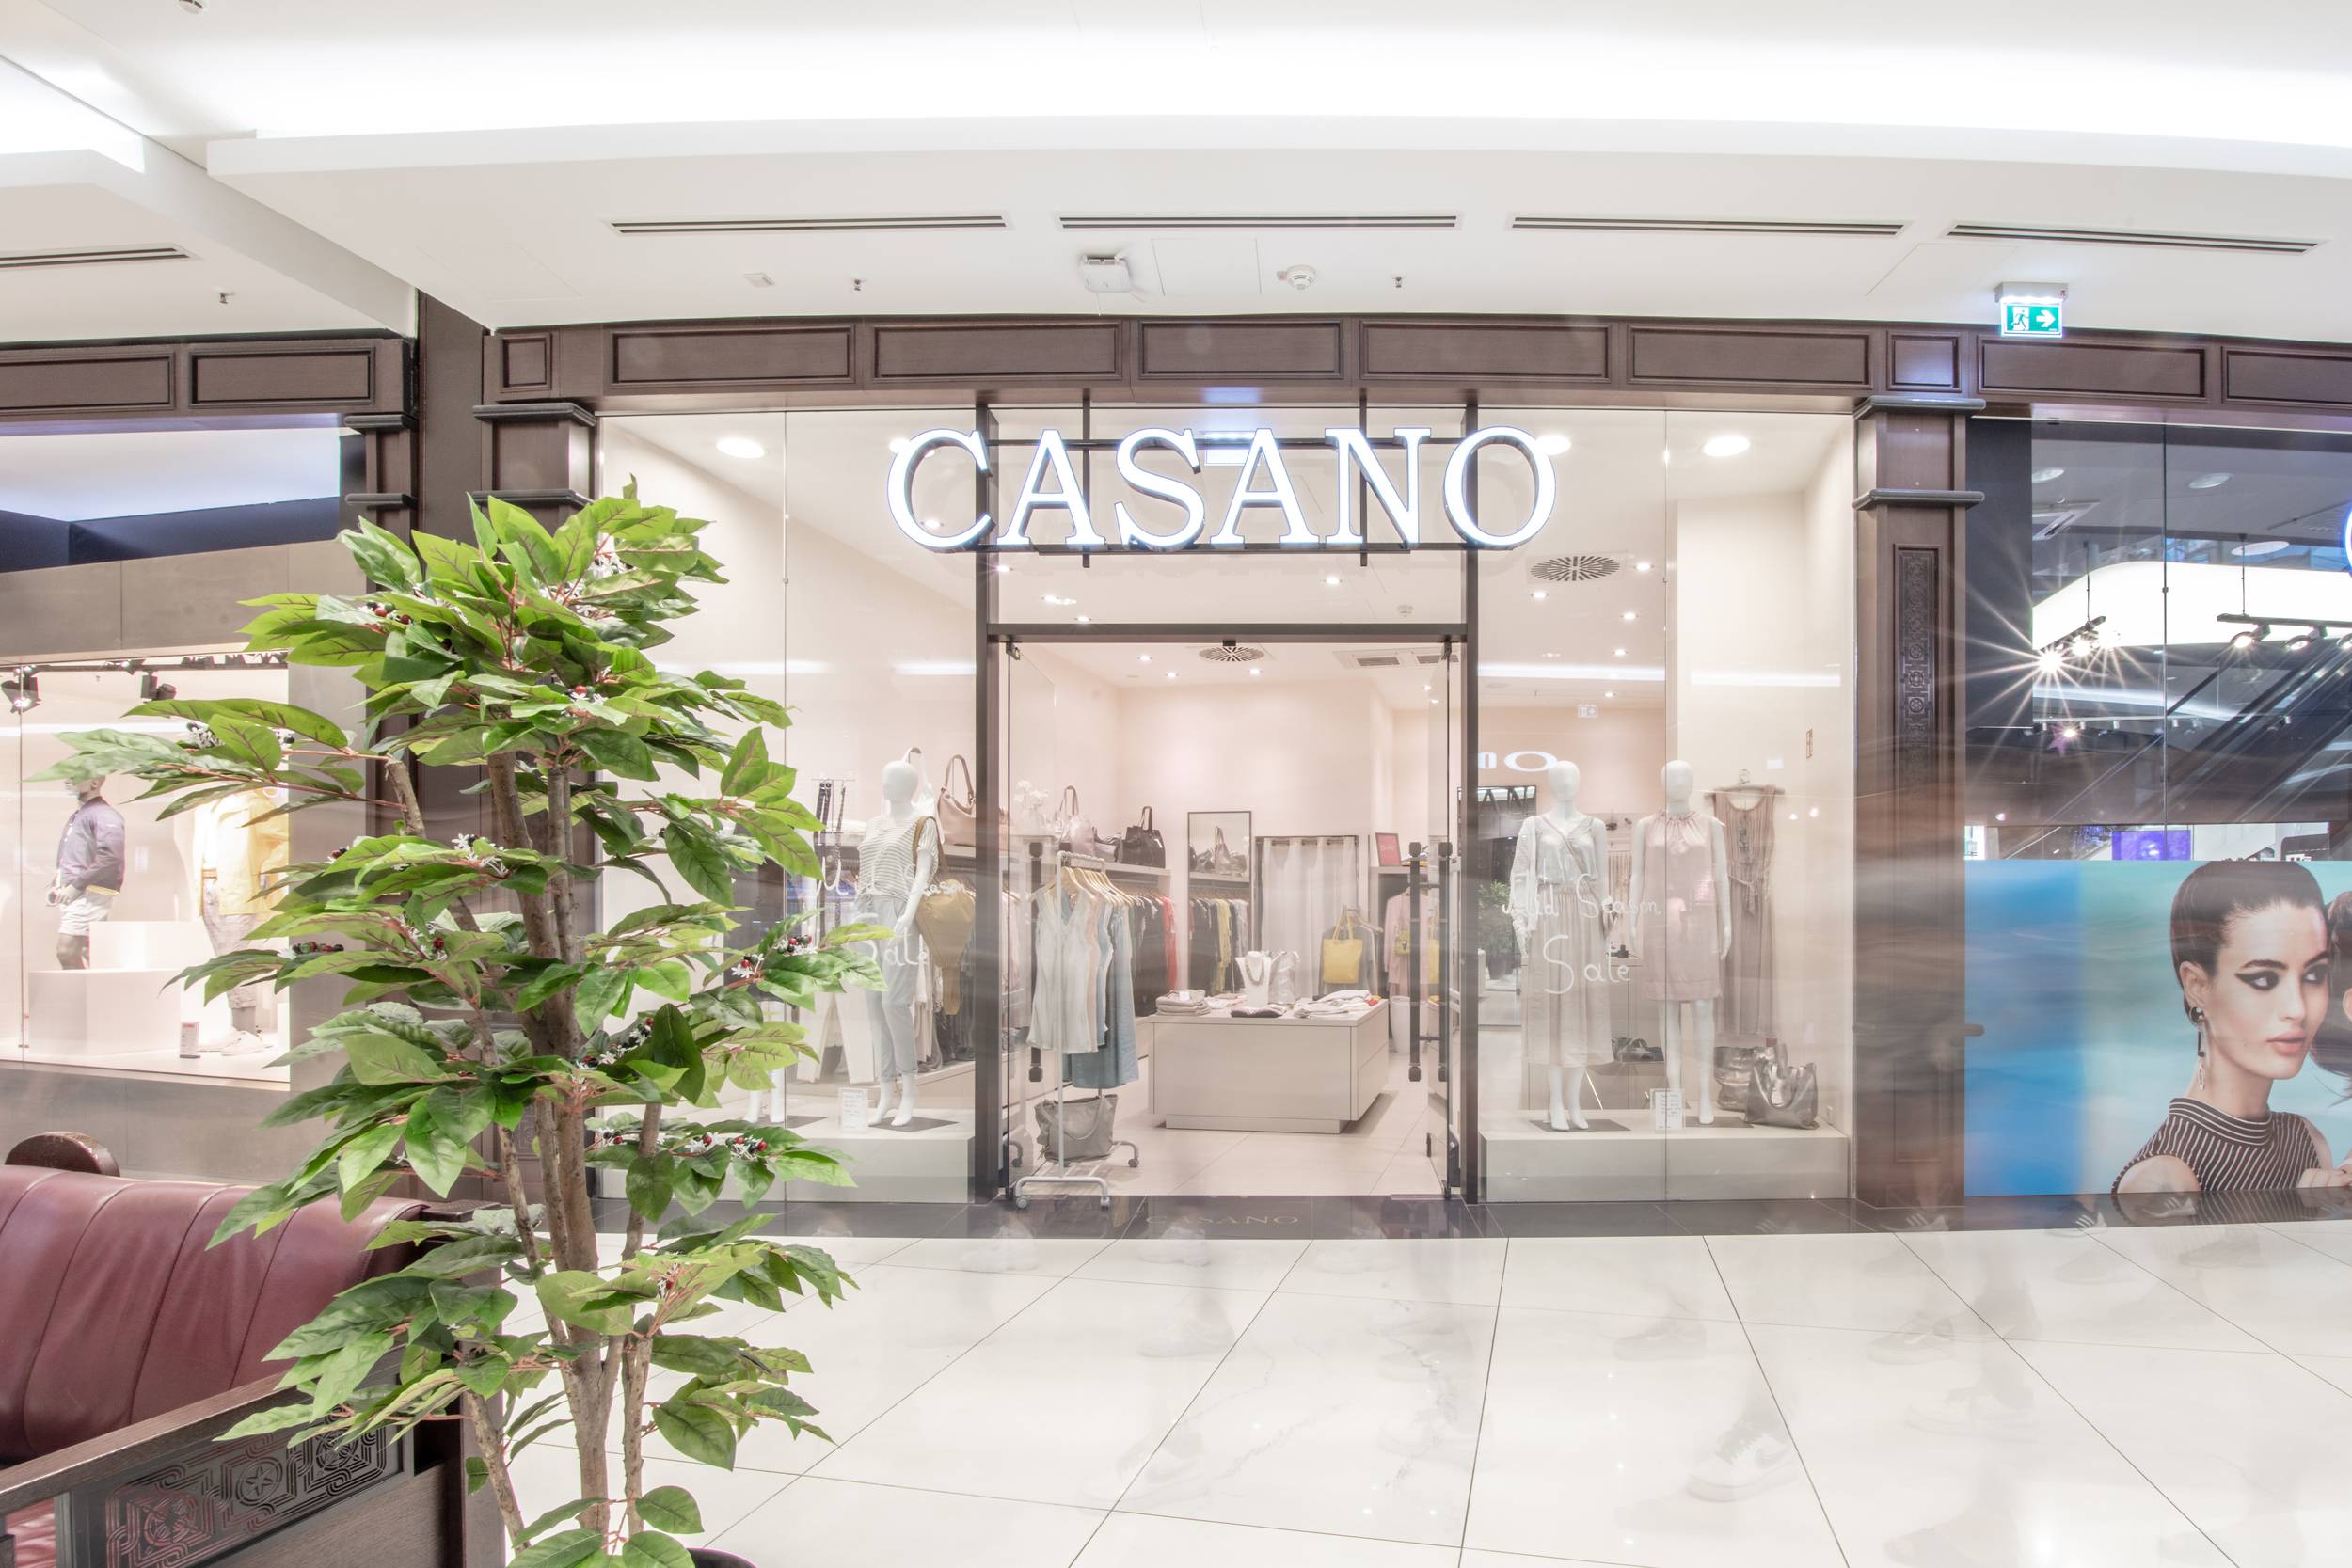 Casano at the Mall of Berlin